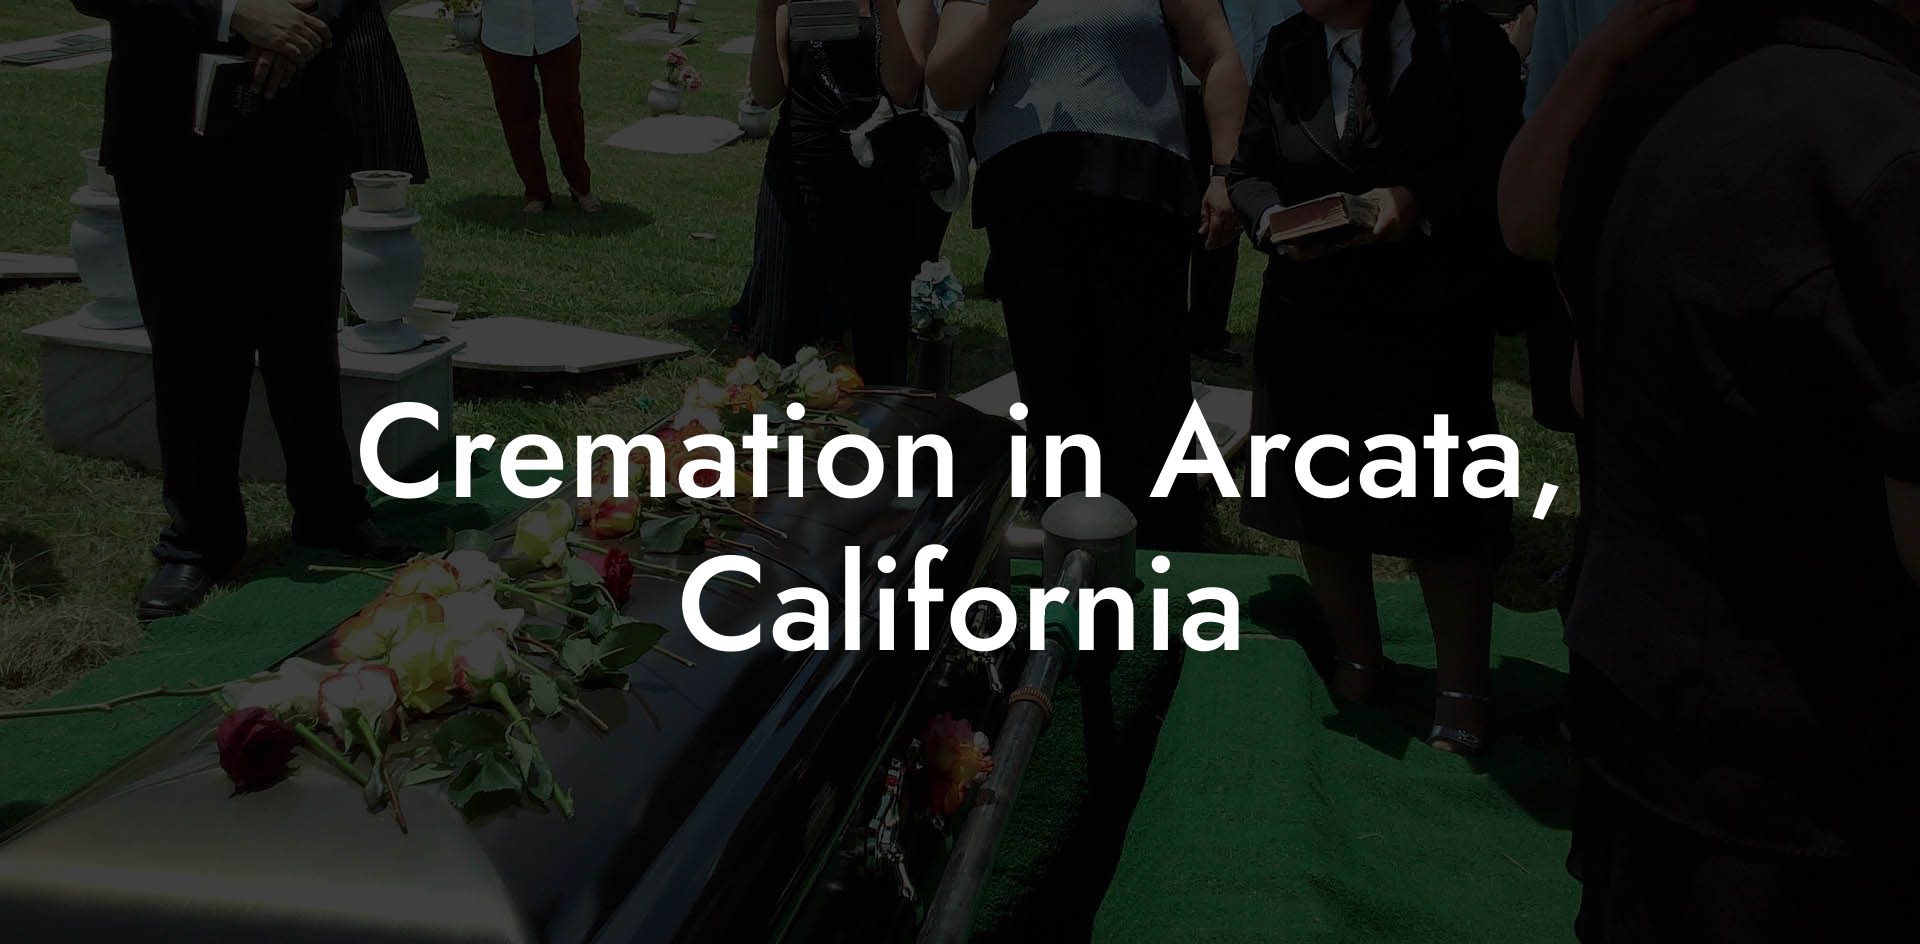 Cremation in Arcata, California